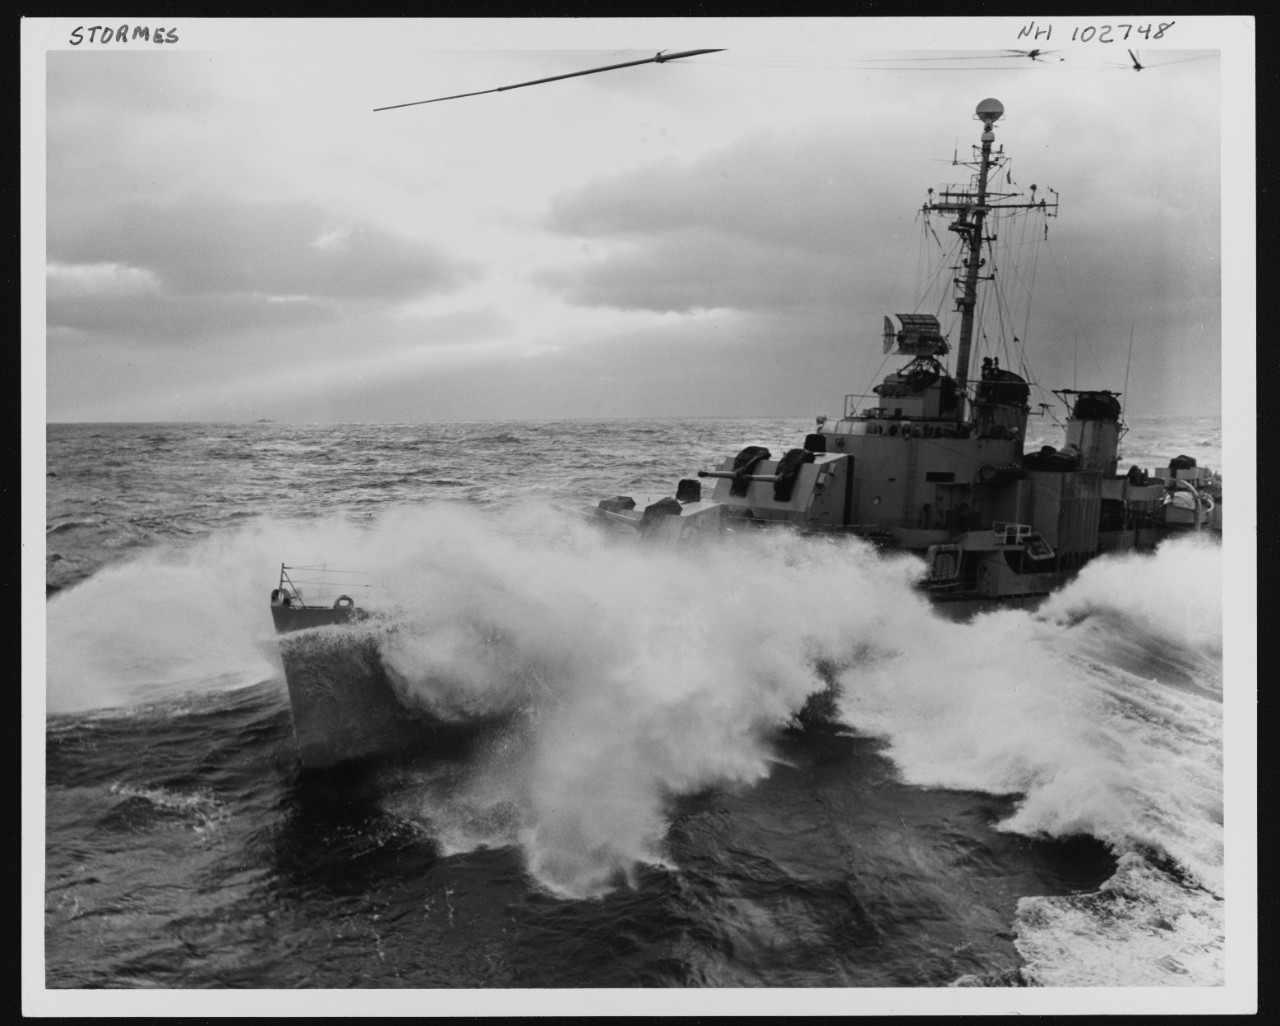 Photo #: NH 102748  USS Stormes